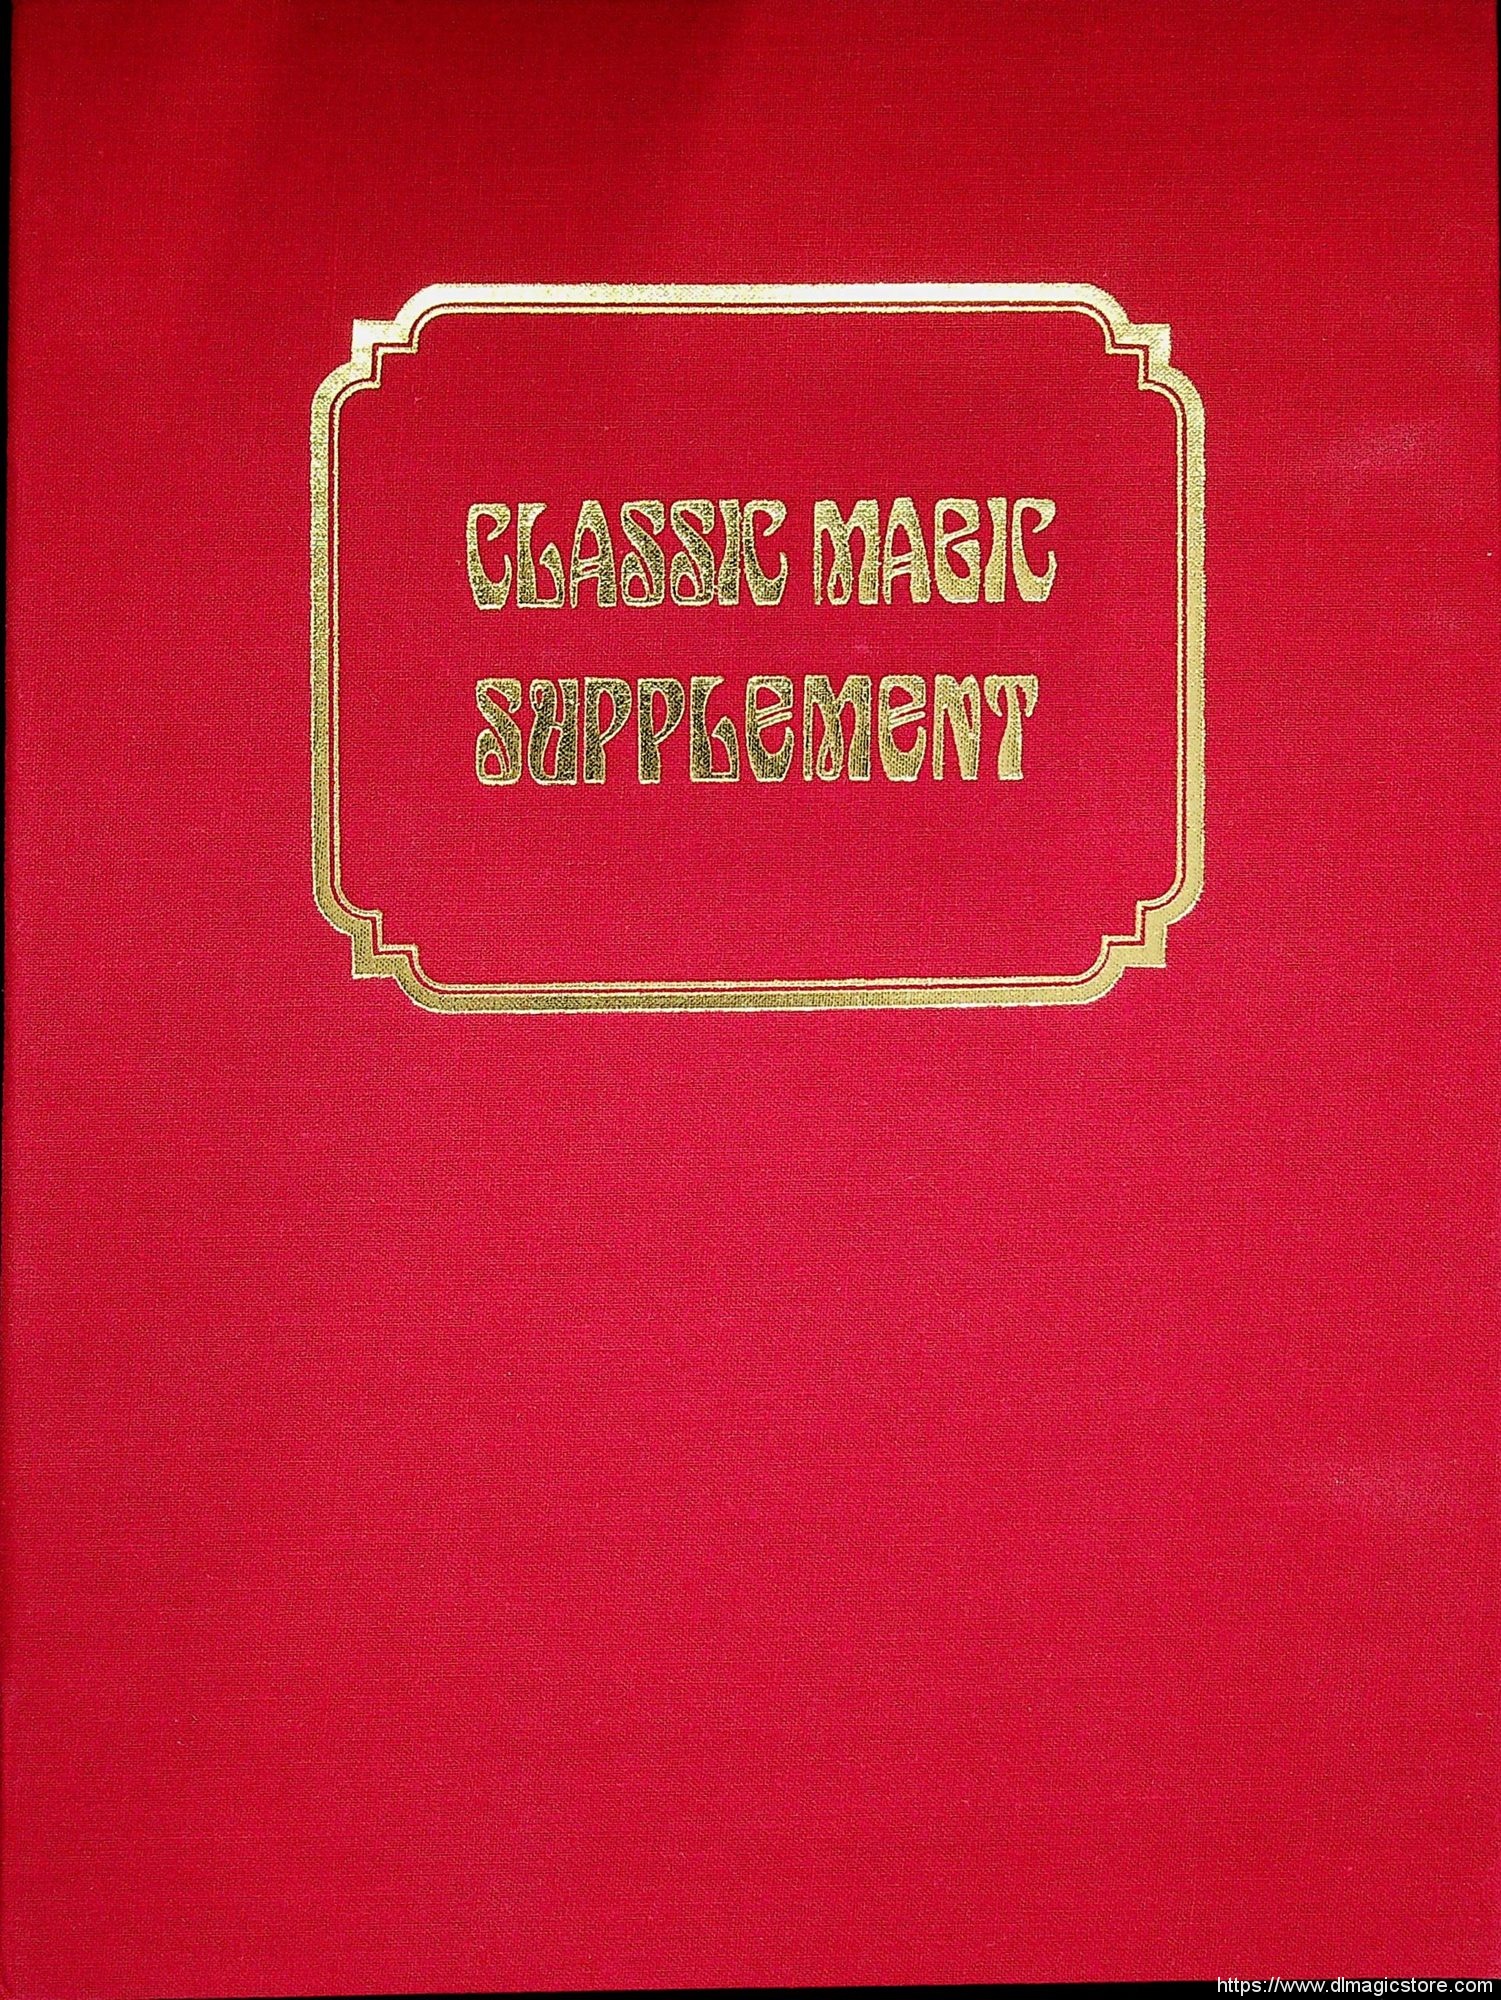 Albo 08 – Classic Magic Supplement by Robert J. Albo